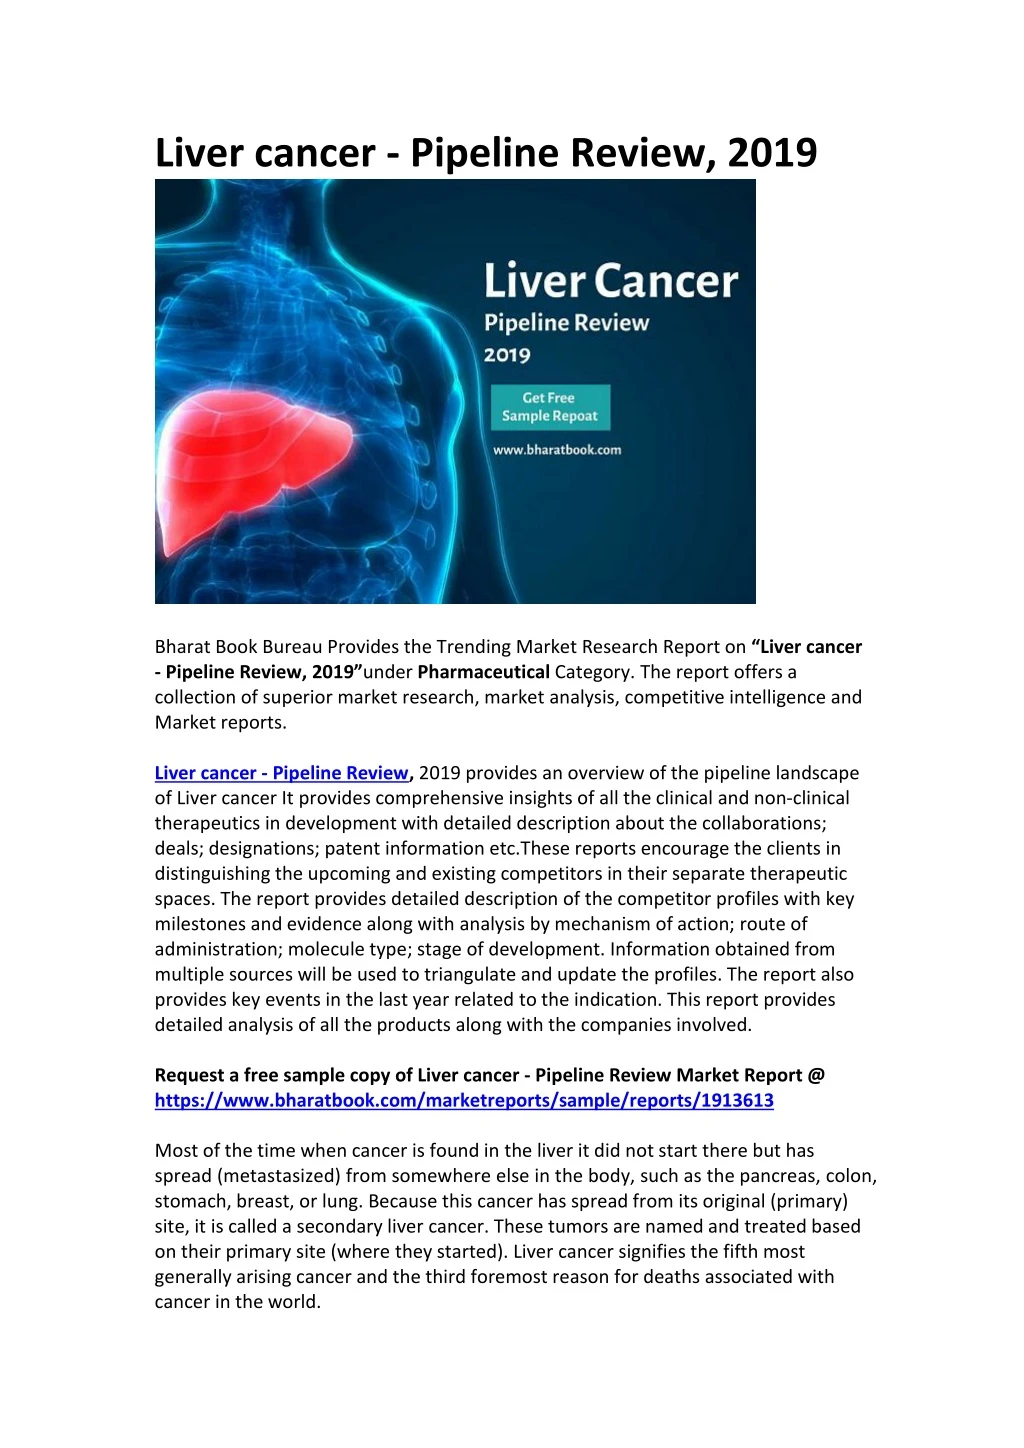 liver cancer pipeline review 2019